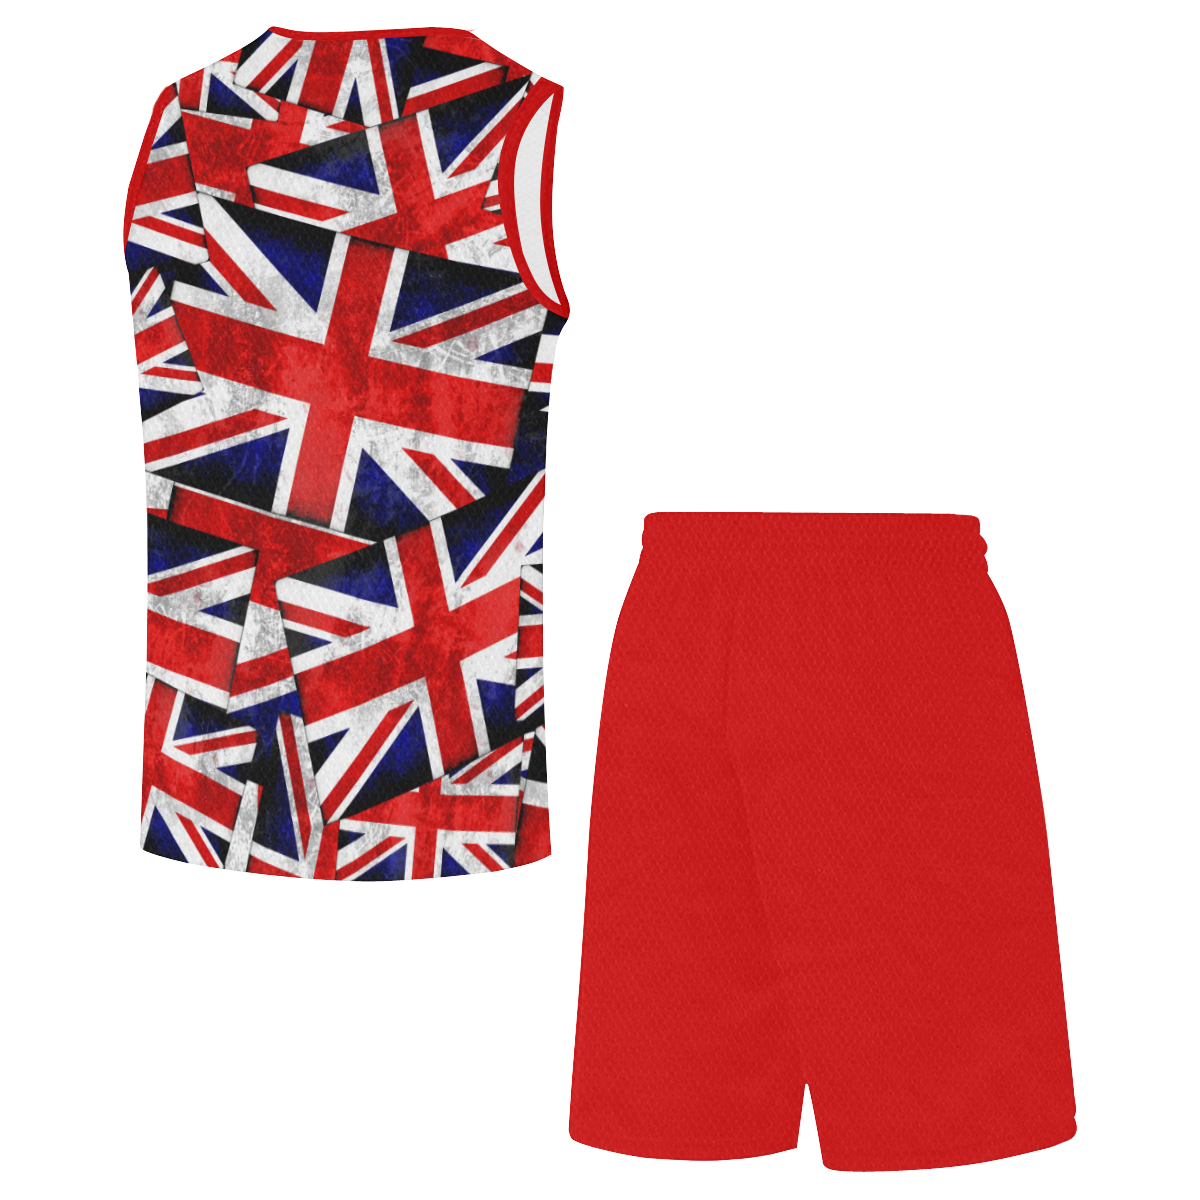 Union Jack British UK Flag - Red All Over Print Basketball Uniform